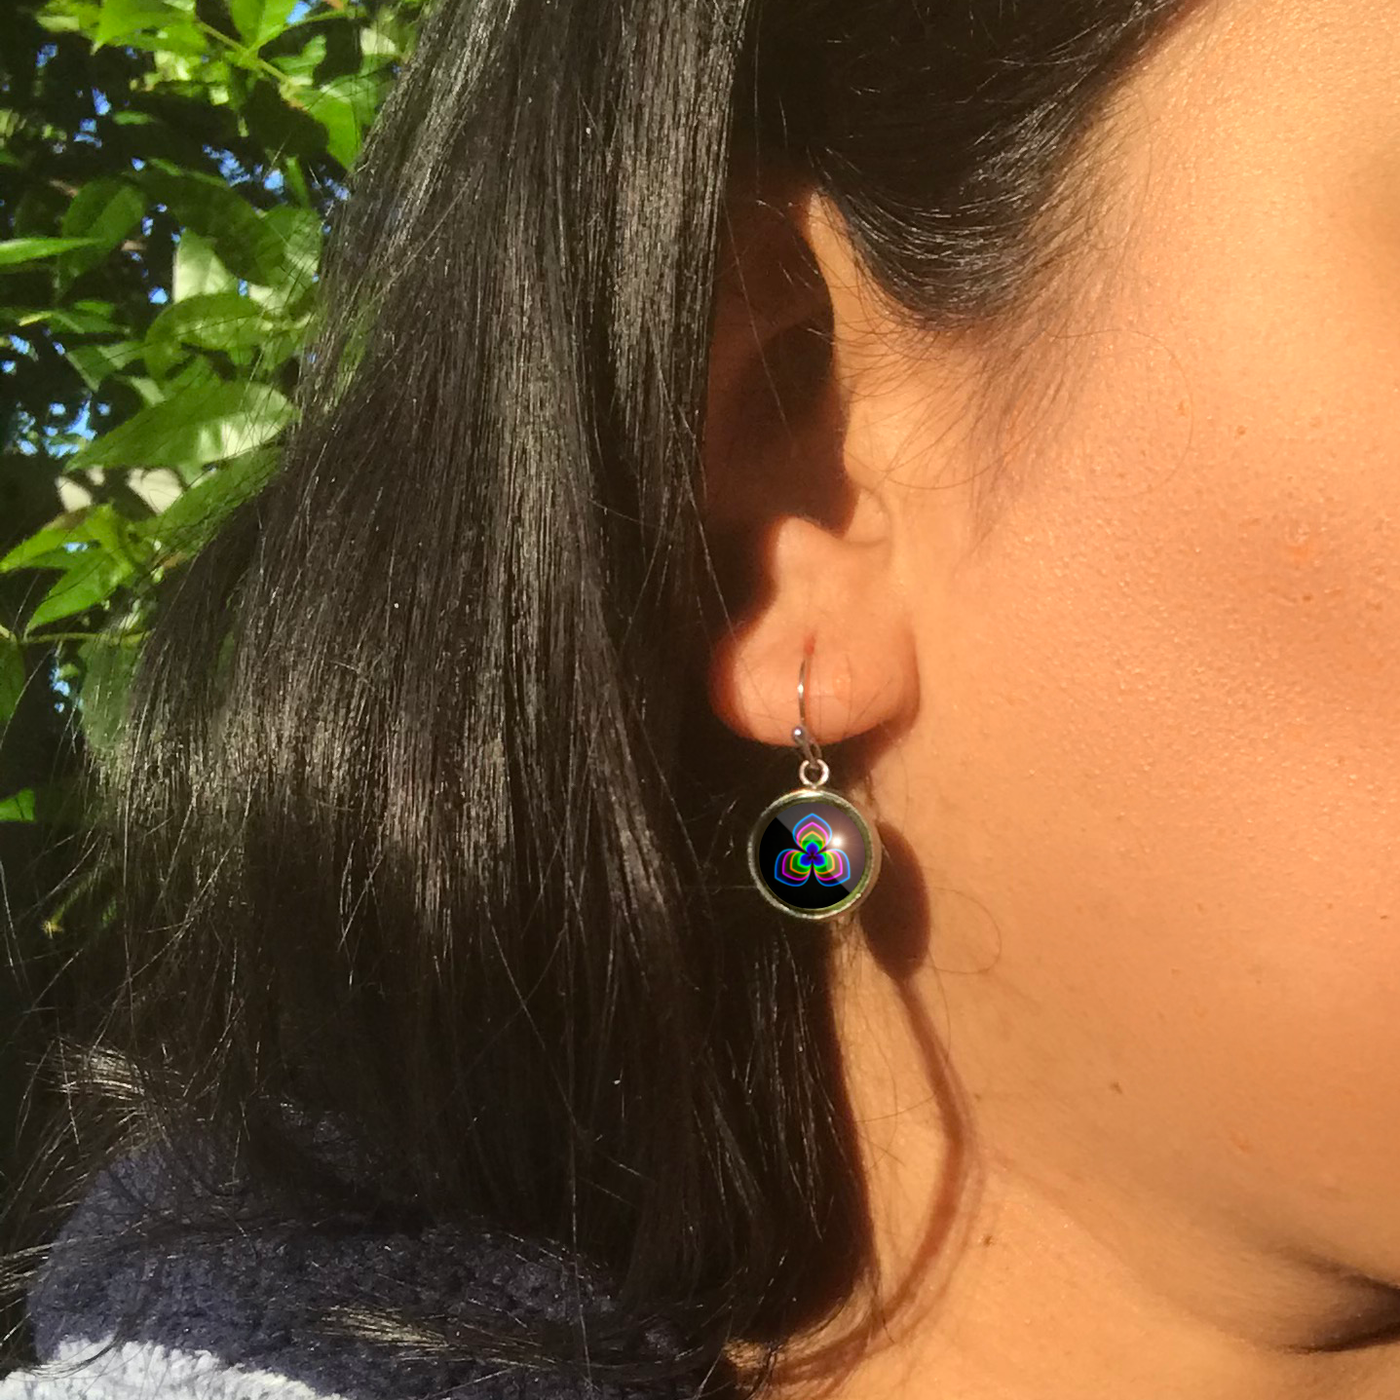 XX7 - Cleanse & Energize - Zurhy Earring Jewelry -  Sacred Geometry Symbols of Healing Arts - Ball Dot Hook